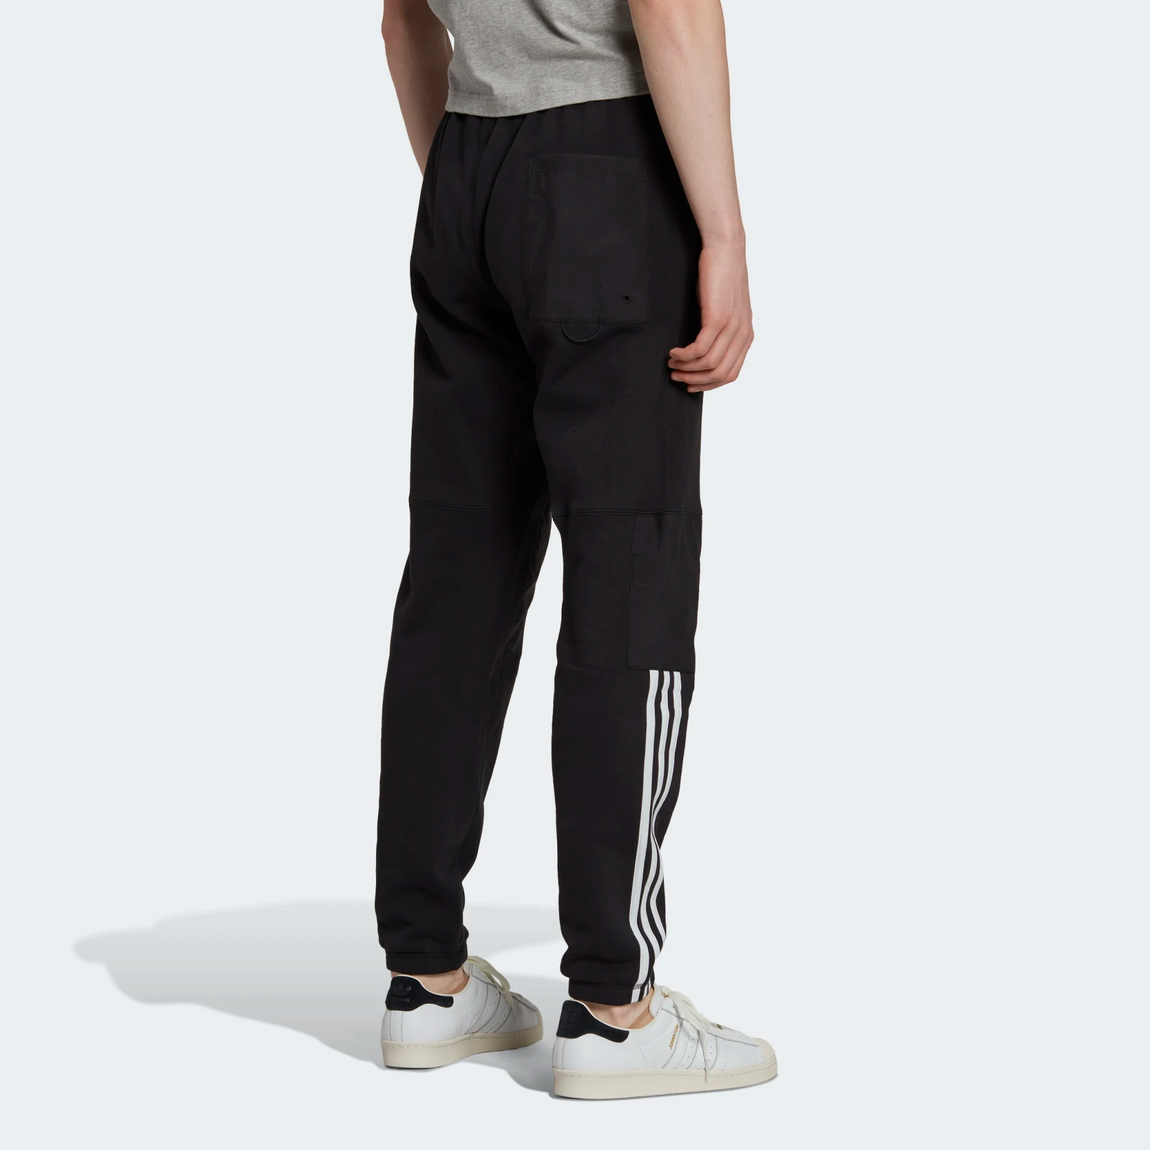 Adidas Parley Pants (Black) - Adidas Parley Pants (Black) - 